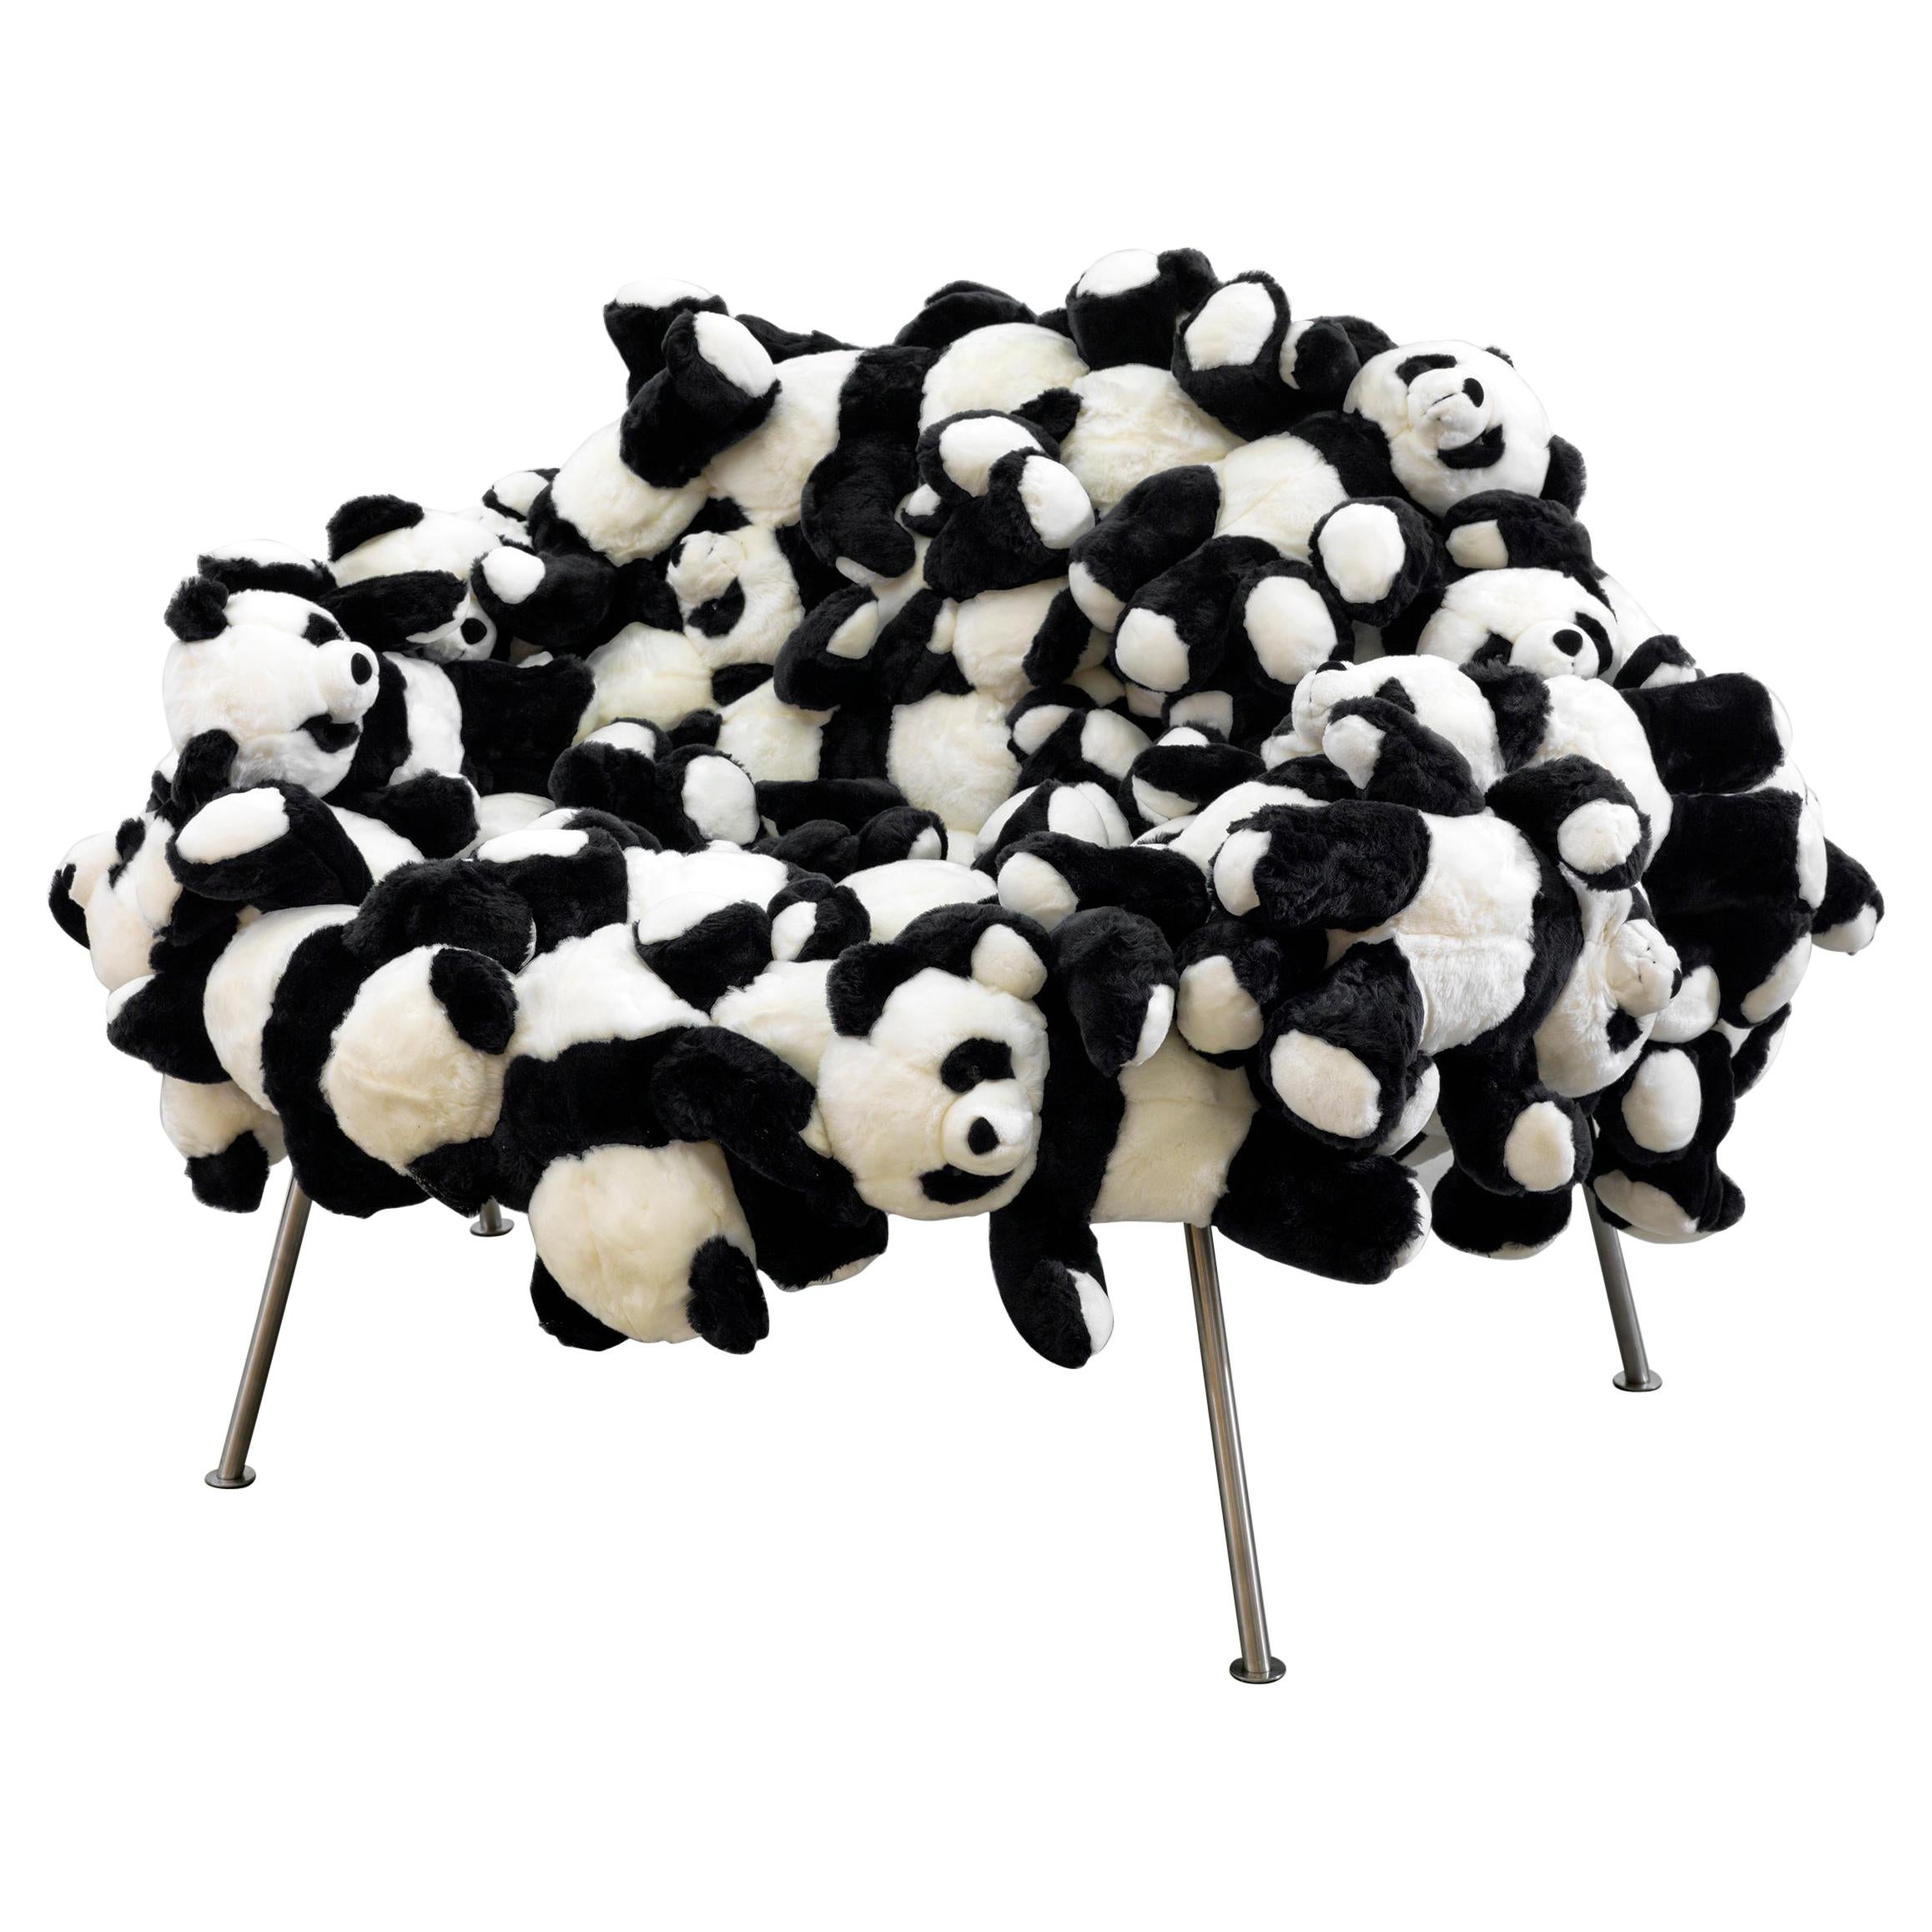 Fernando and Humberto Campana, "Panda Banquete Chair", Designed in 2005